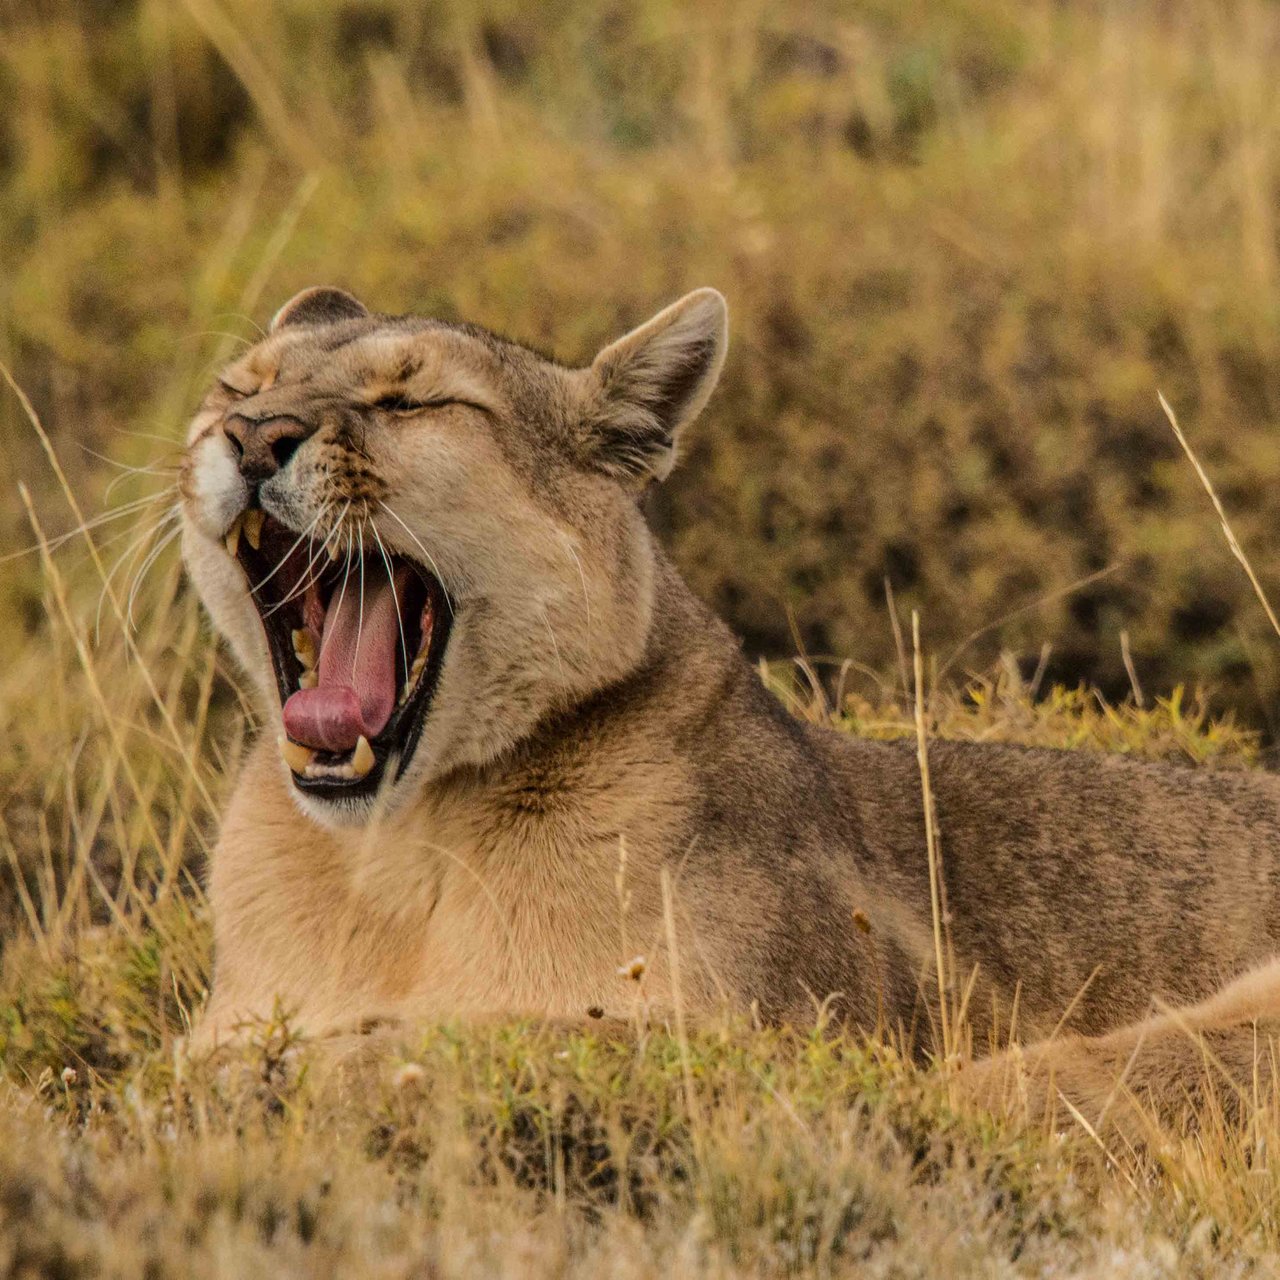 "Tired as a puma" - Shot 3 weeks ago on a #Puma tracking. #Wildlife #Chile #Patagonia #Travel #Safari https://t.co/oW1BQxgQie